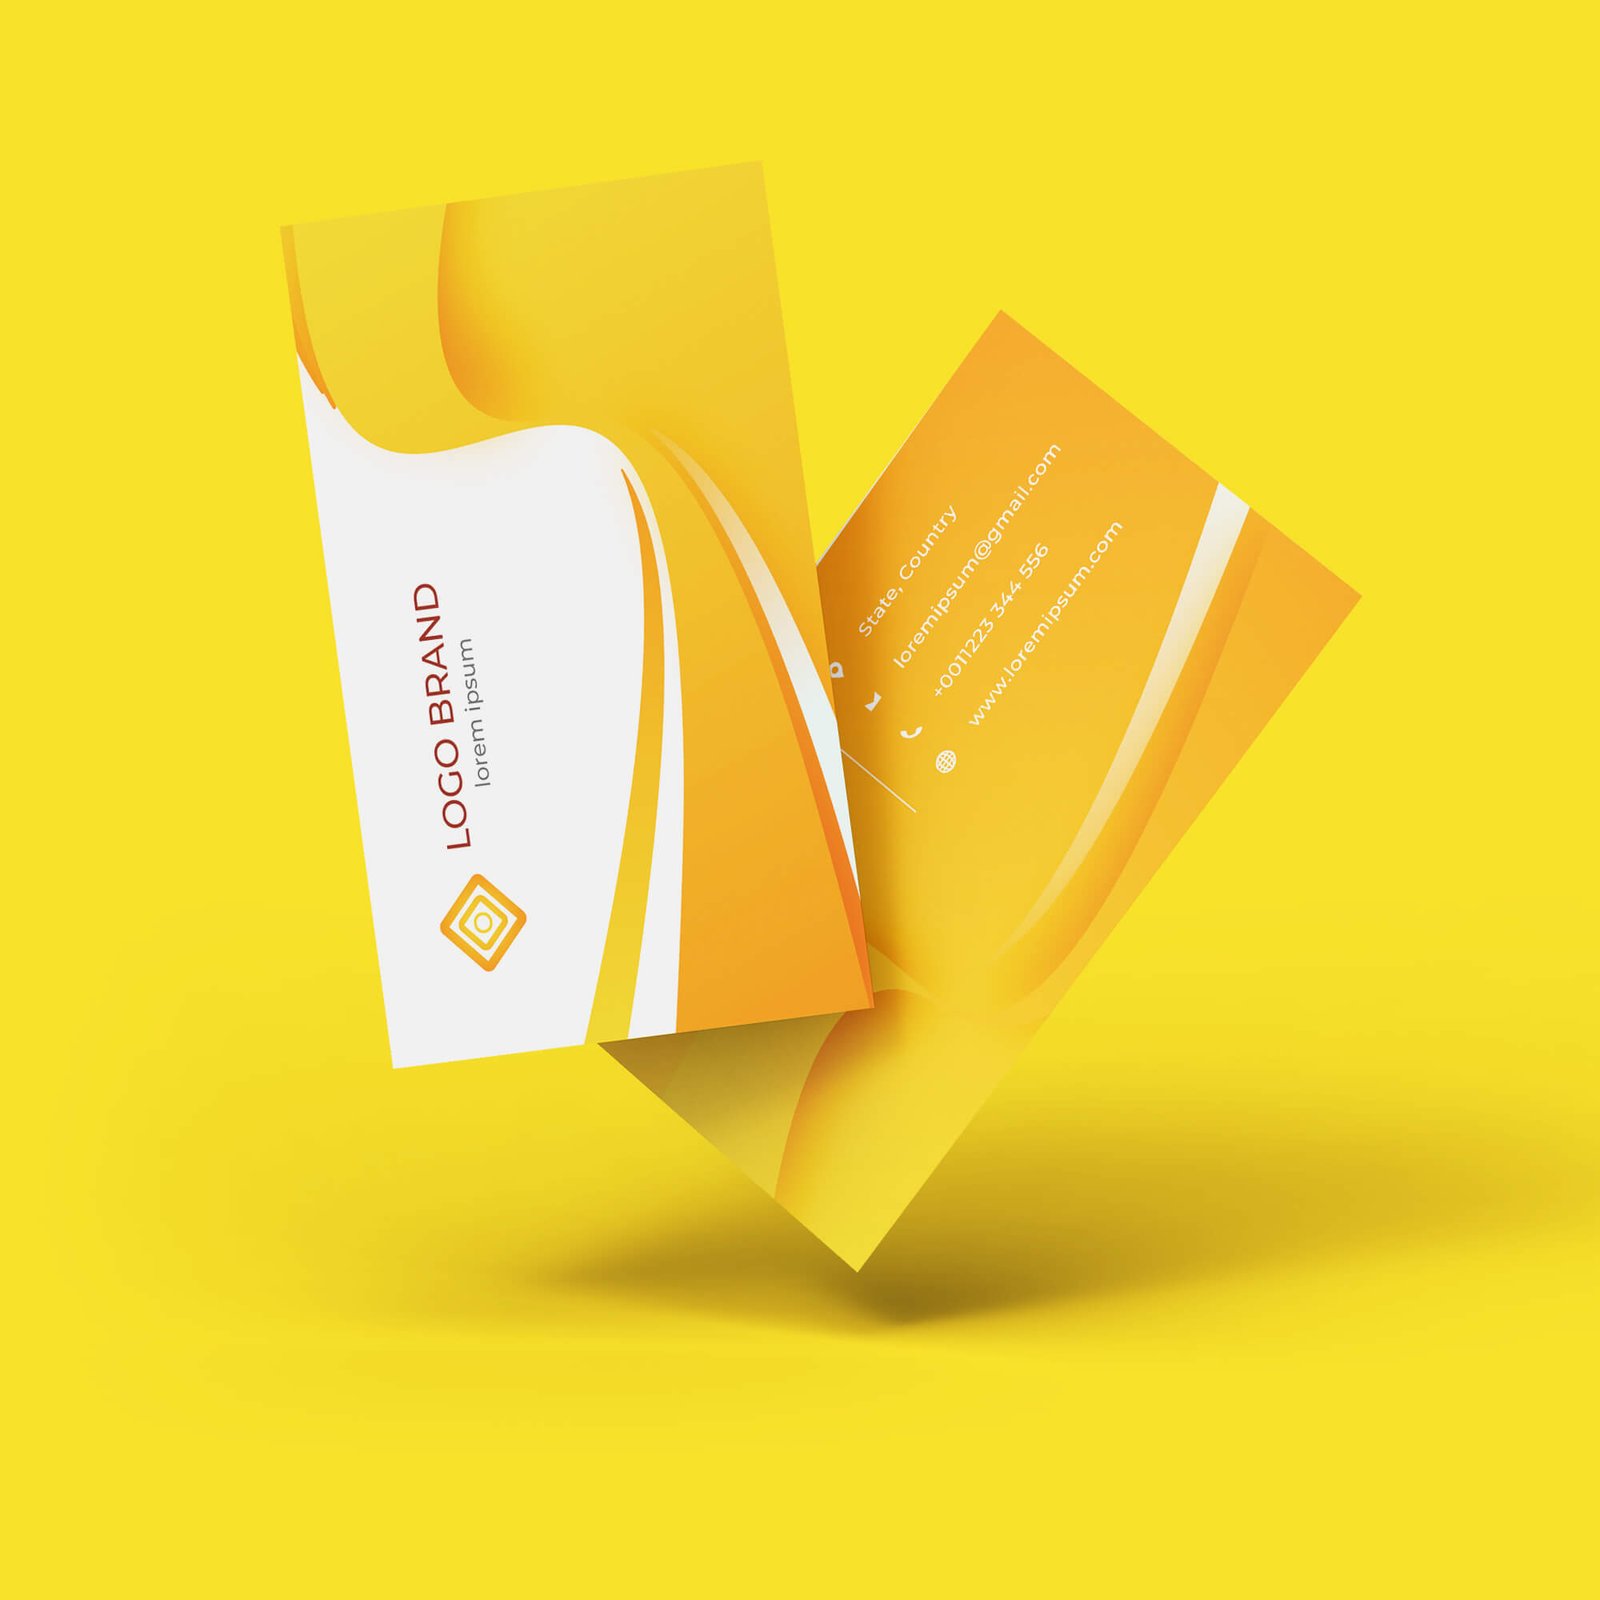 Design Free Floating Card Mockup PSD Template